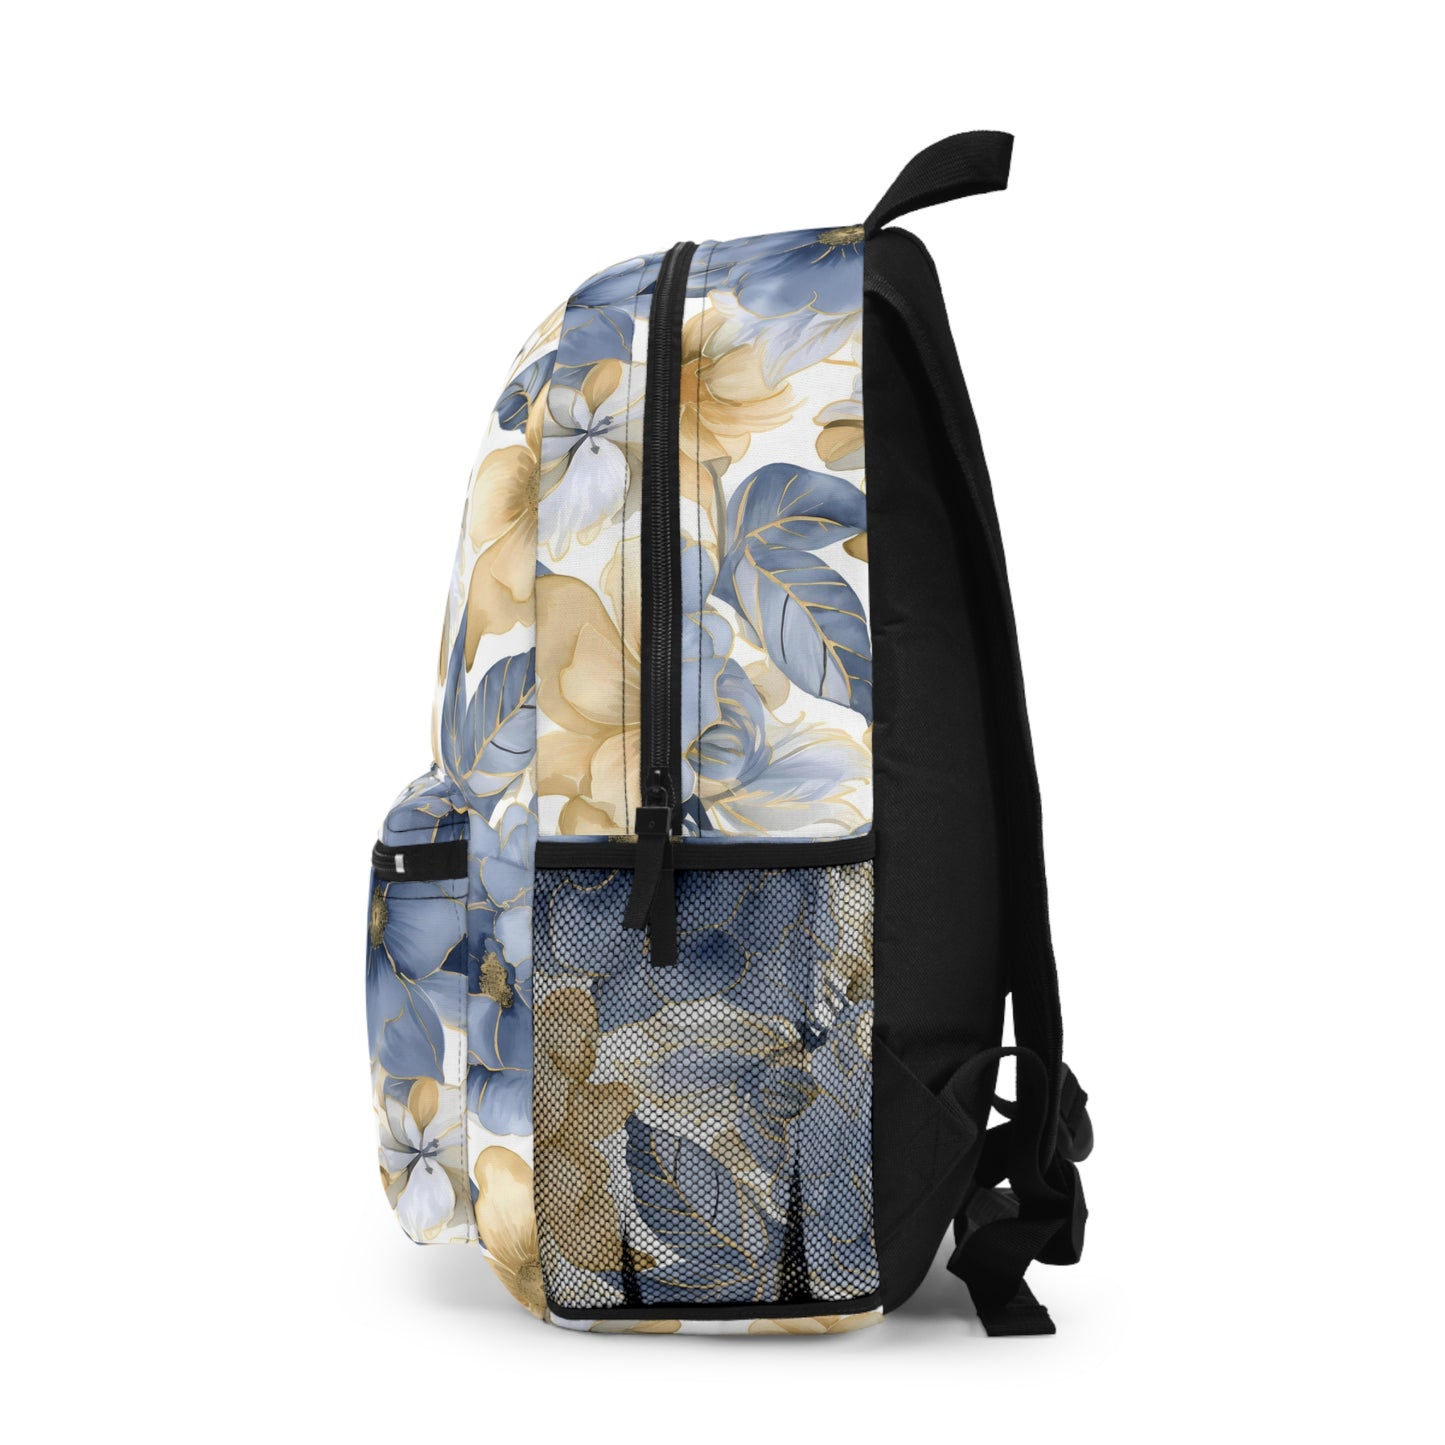 Floral Backpack, Girl's Gold and Blue Bookbag